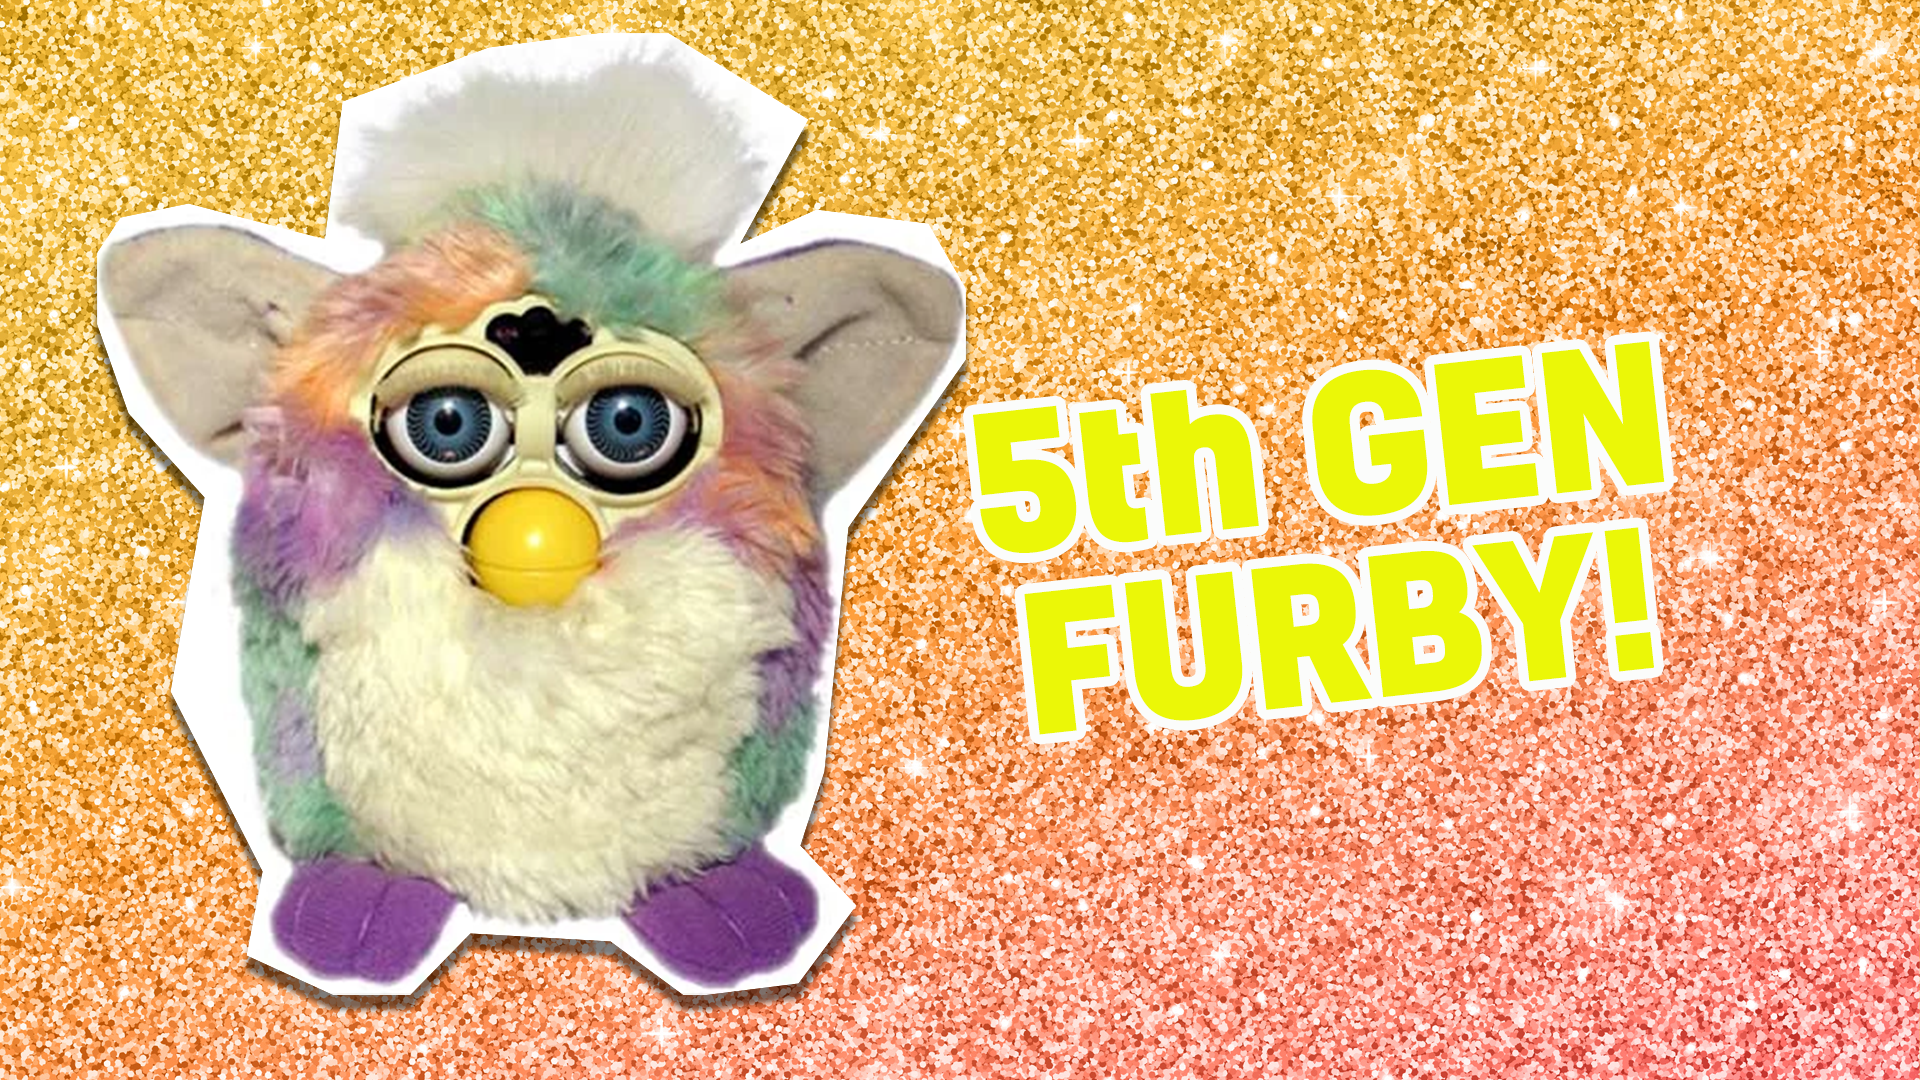 Which Furby Are You Quiz! | Beano.com